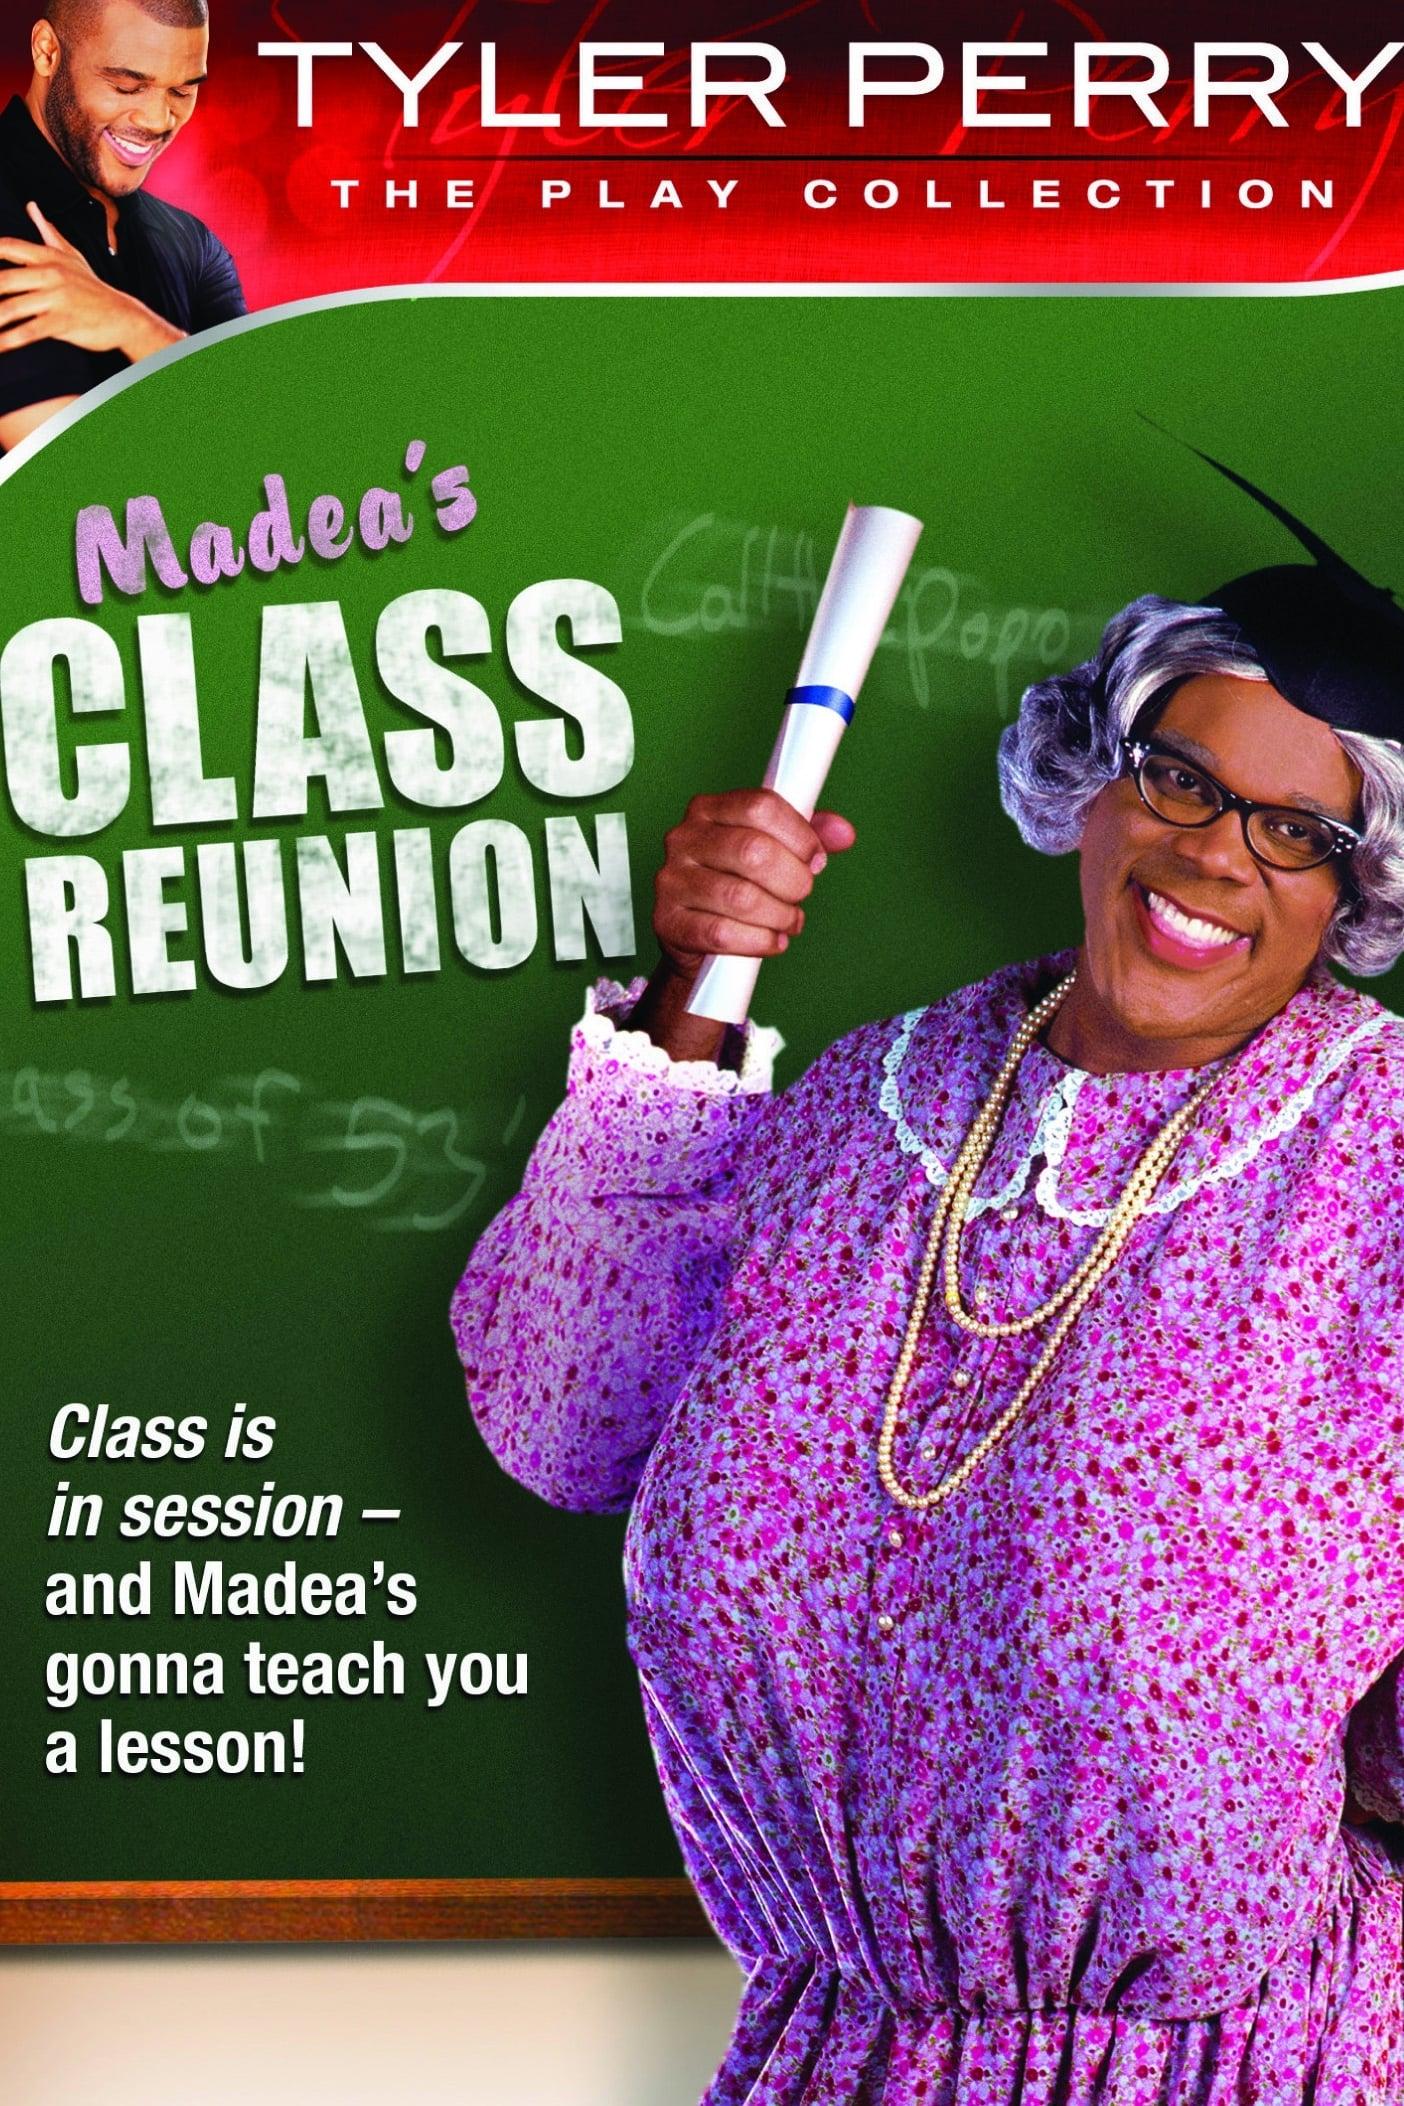 Madea's Class Reunion poster